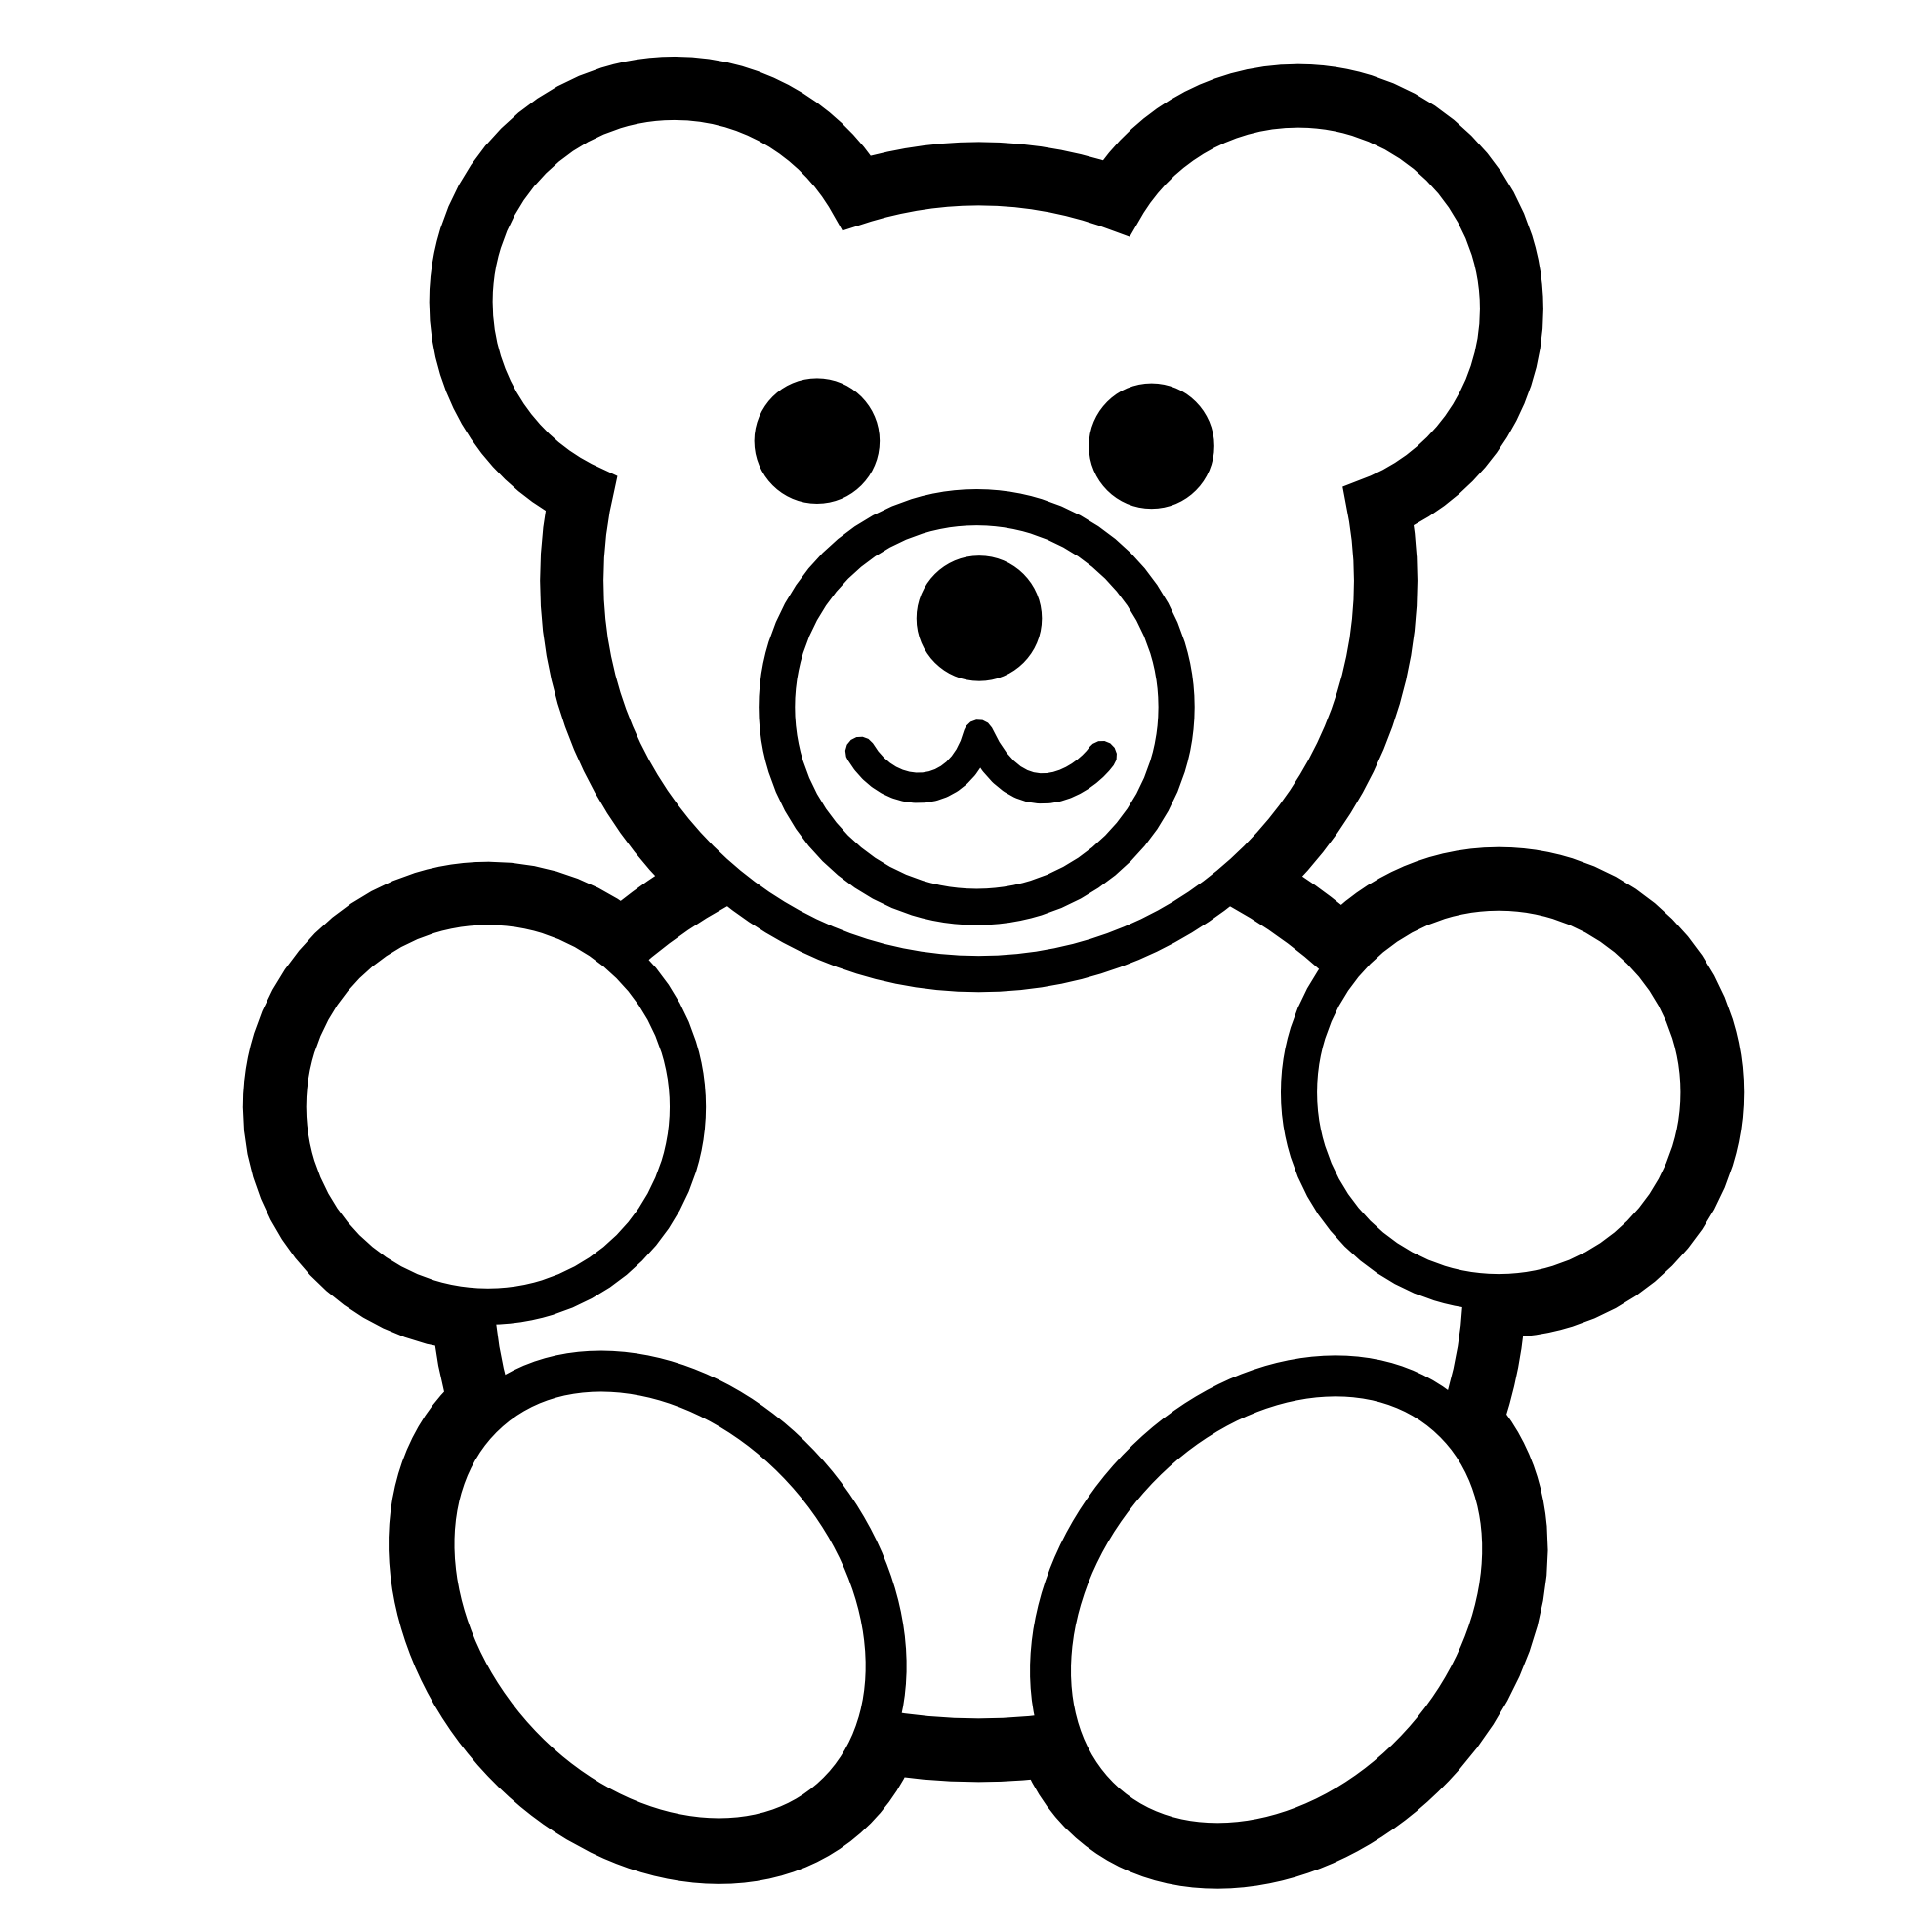 Basic Outline Teddy Bear - ClipArt Best